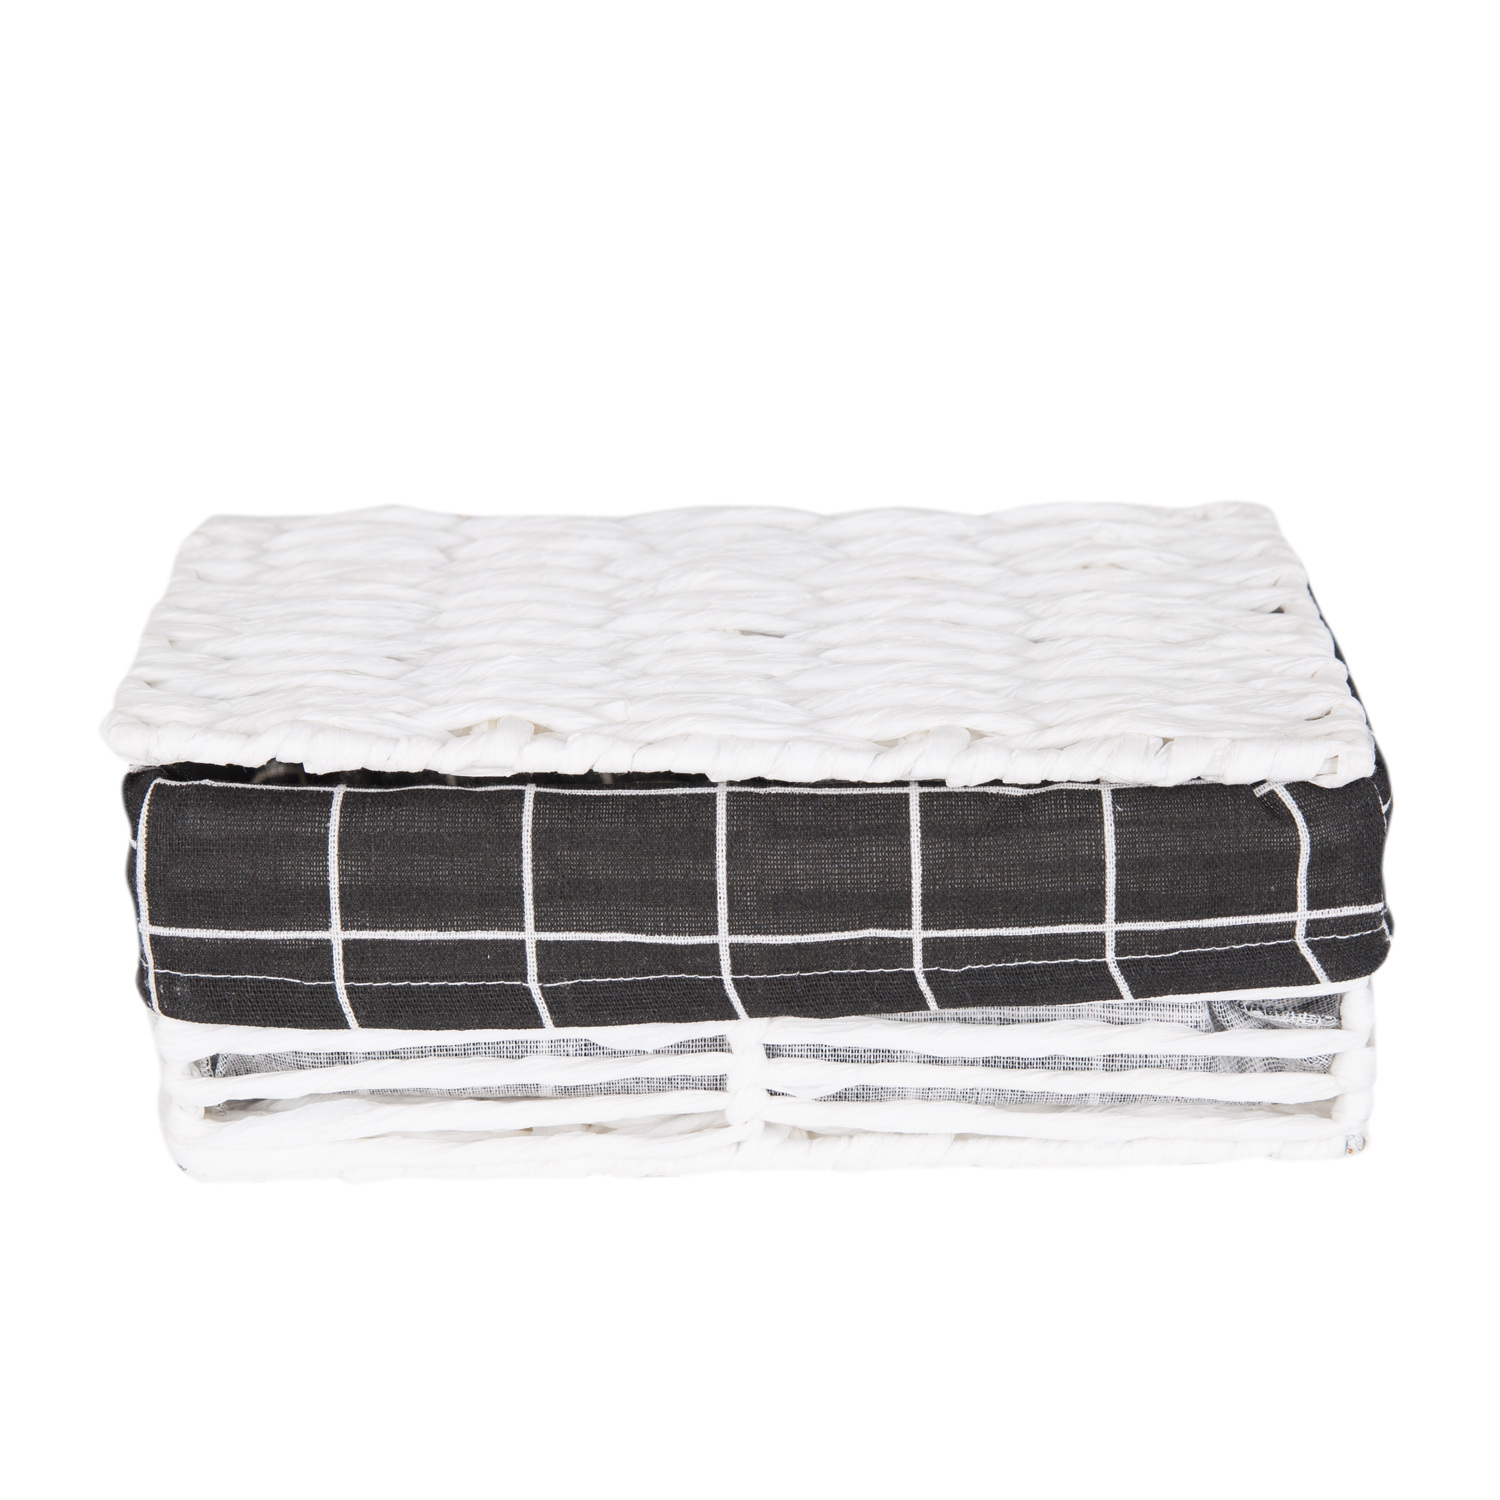 Dikdörtgen Kapaklı Hasır Sepet (Siyah Kare Kumaş İçli) Beyaz 26 X10,5 X 15 Cm